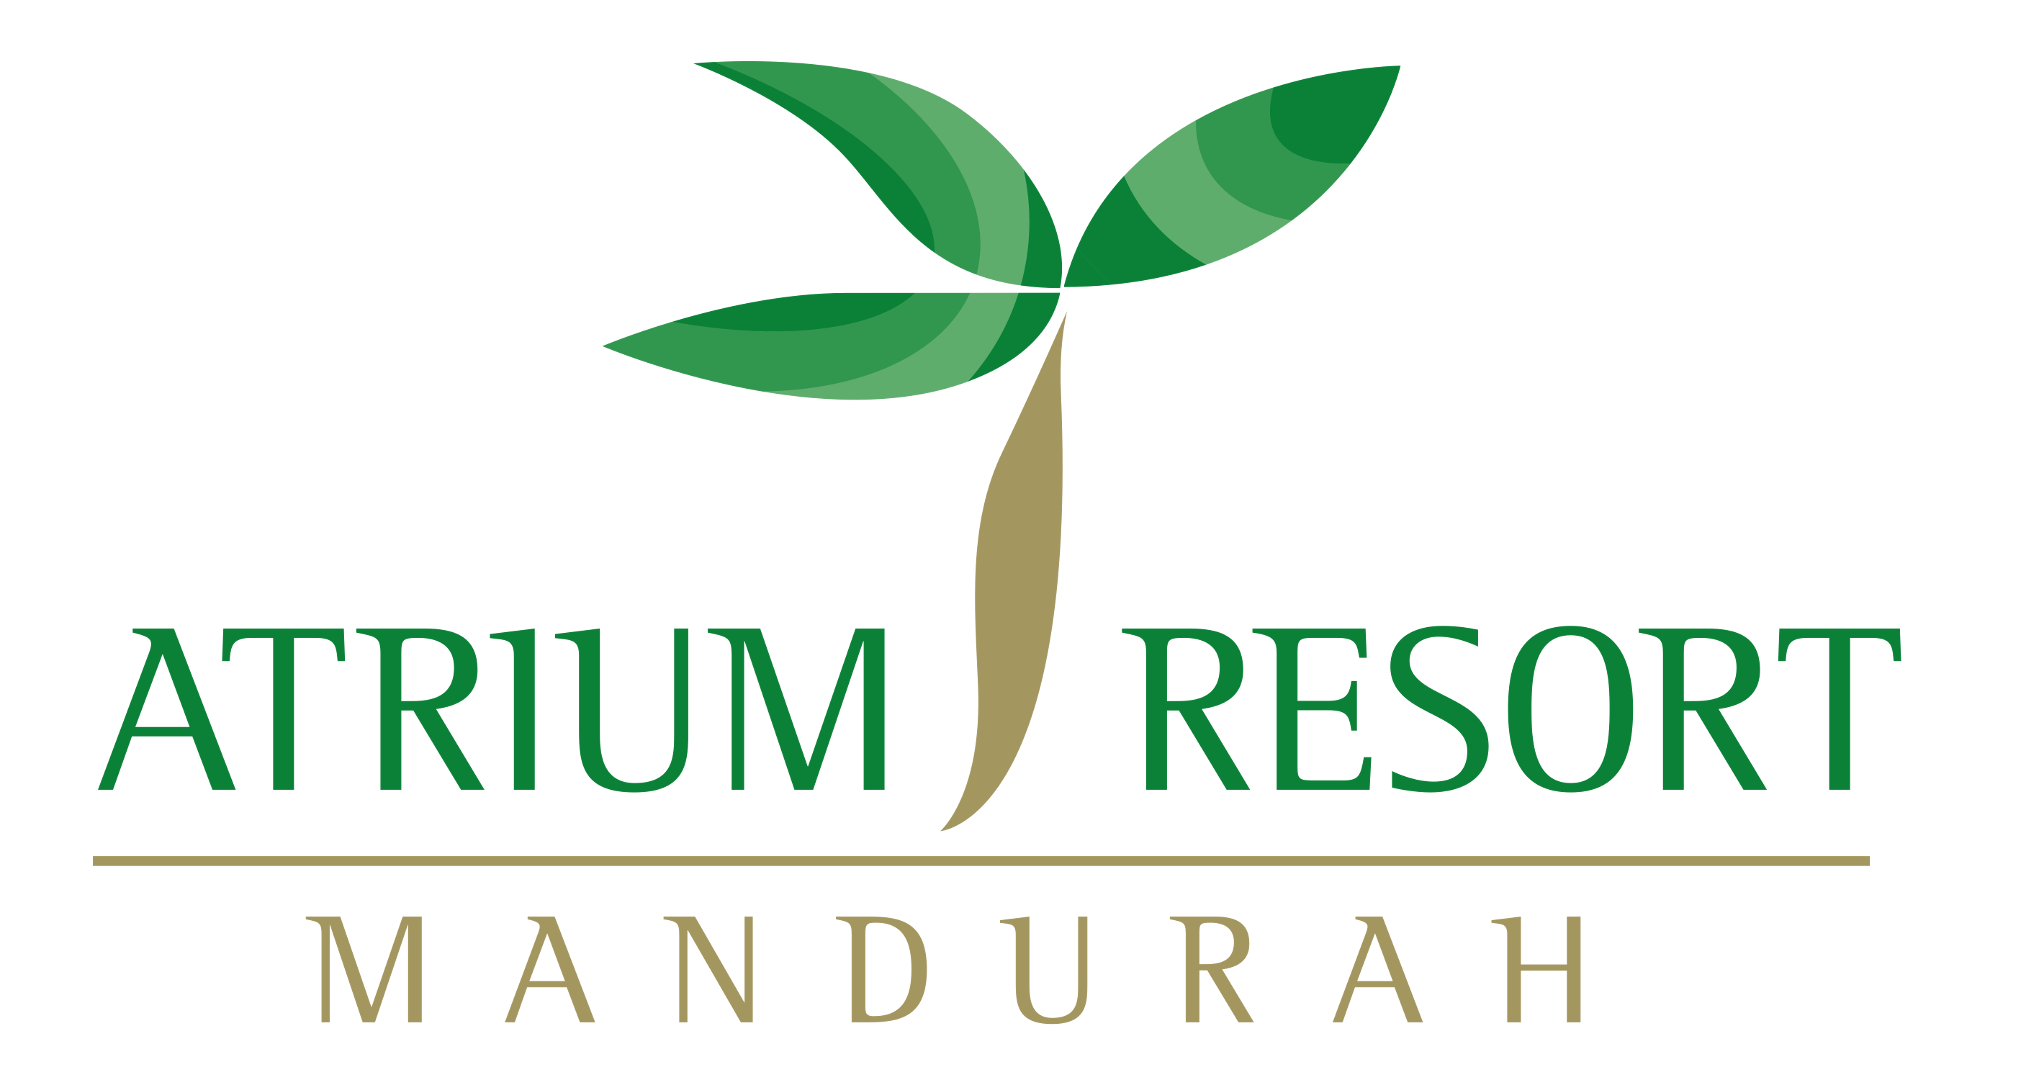 Atrium Resort Hotel Mandurah - Accommodation Port Hedland